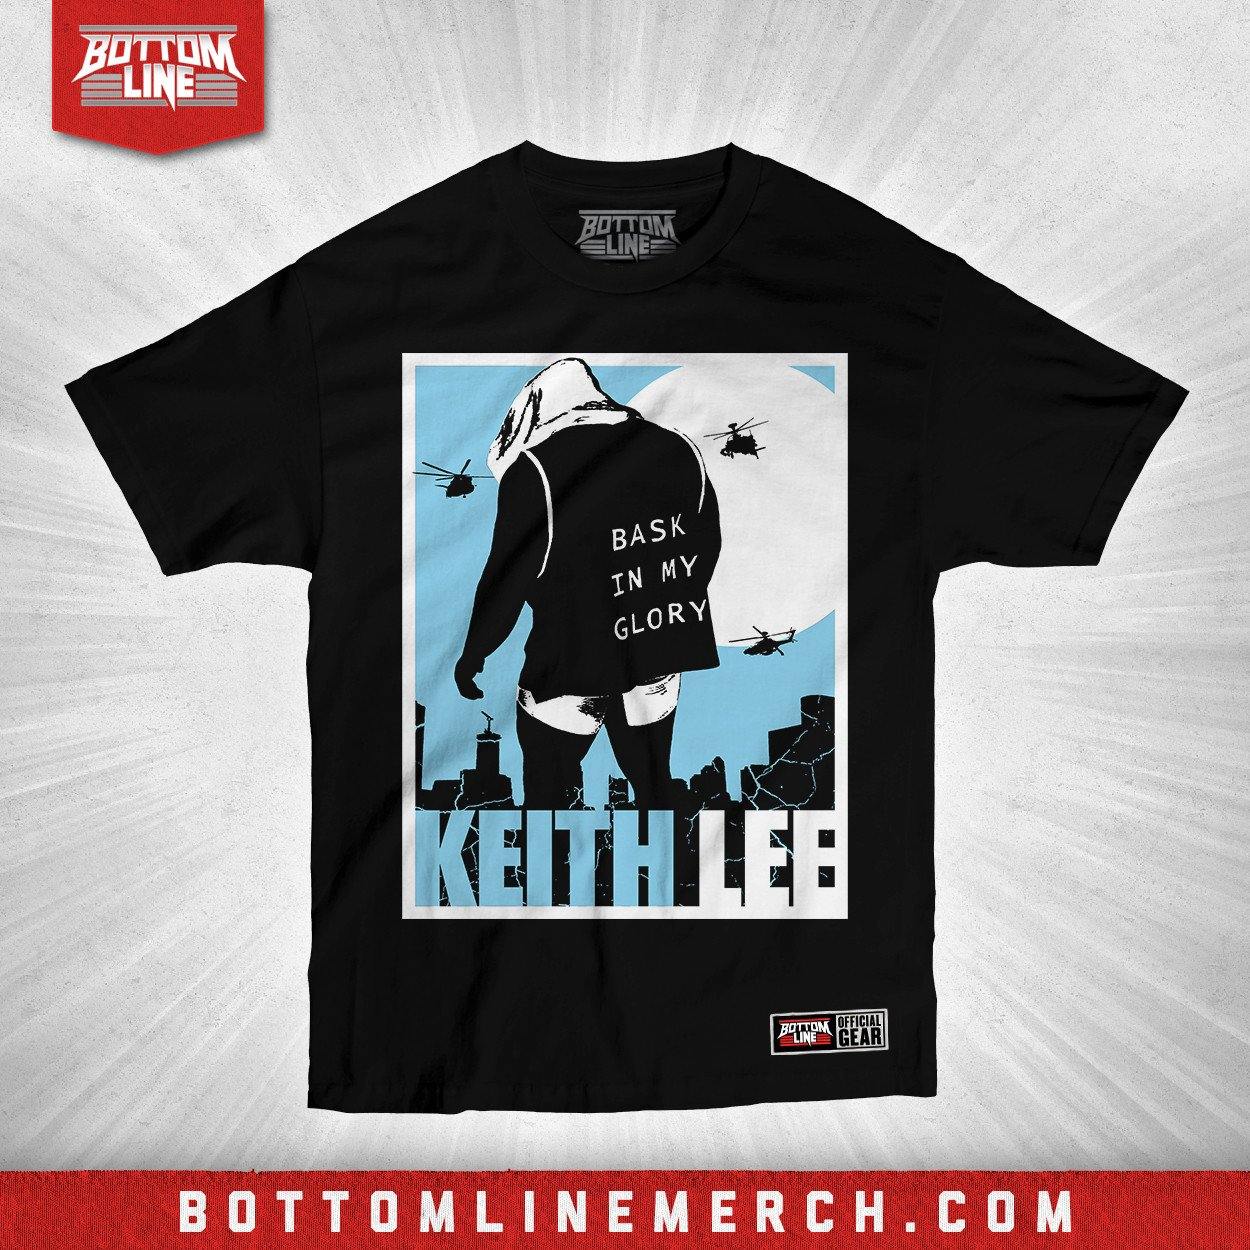 Buy Now – Keith Lee "Keithzilla Carolina Blue" Shirt – Wrestler & Wrestling Merch – Bottom Line